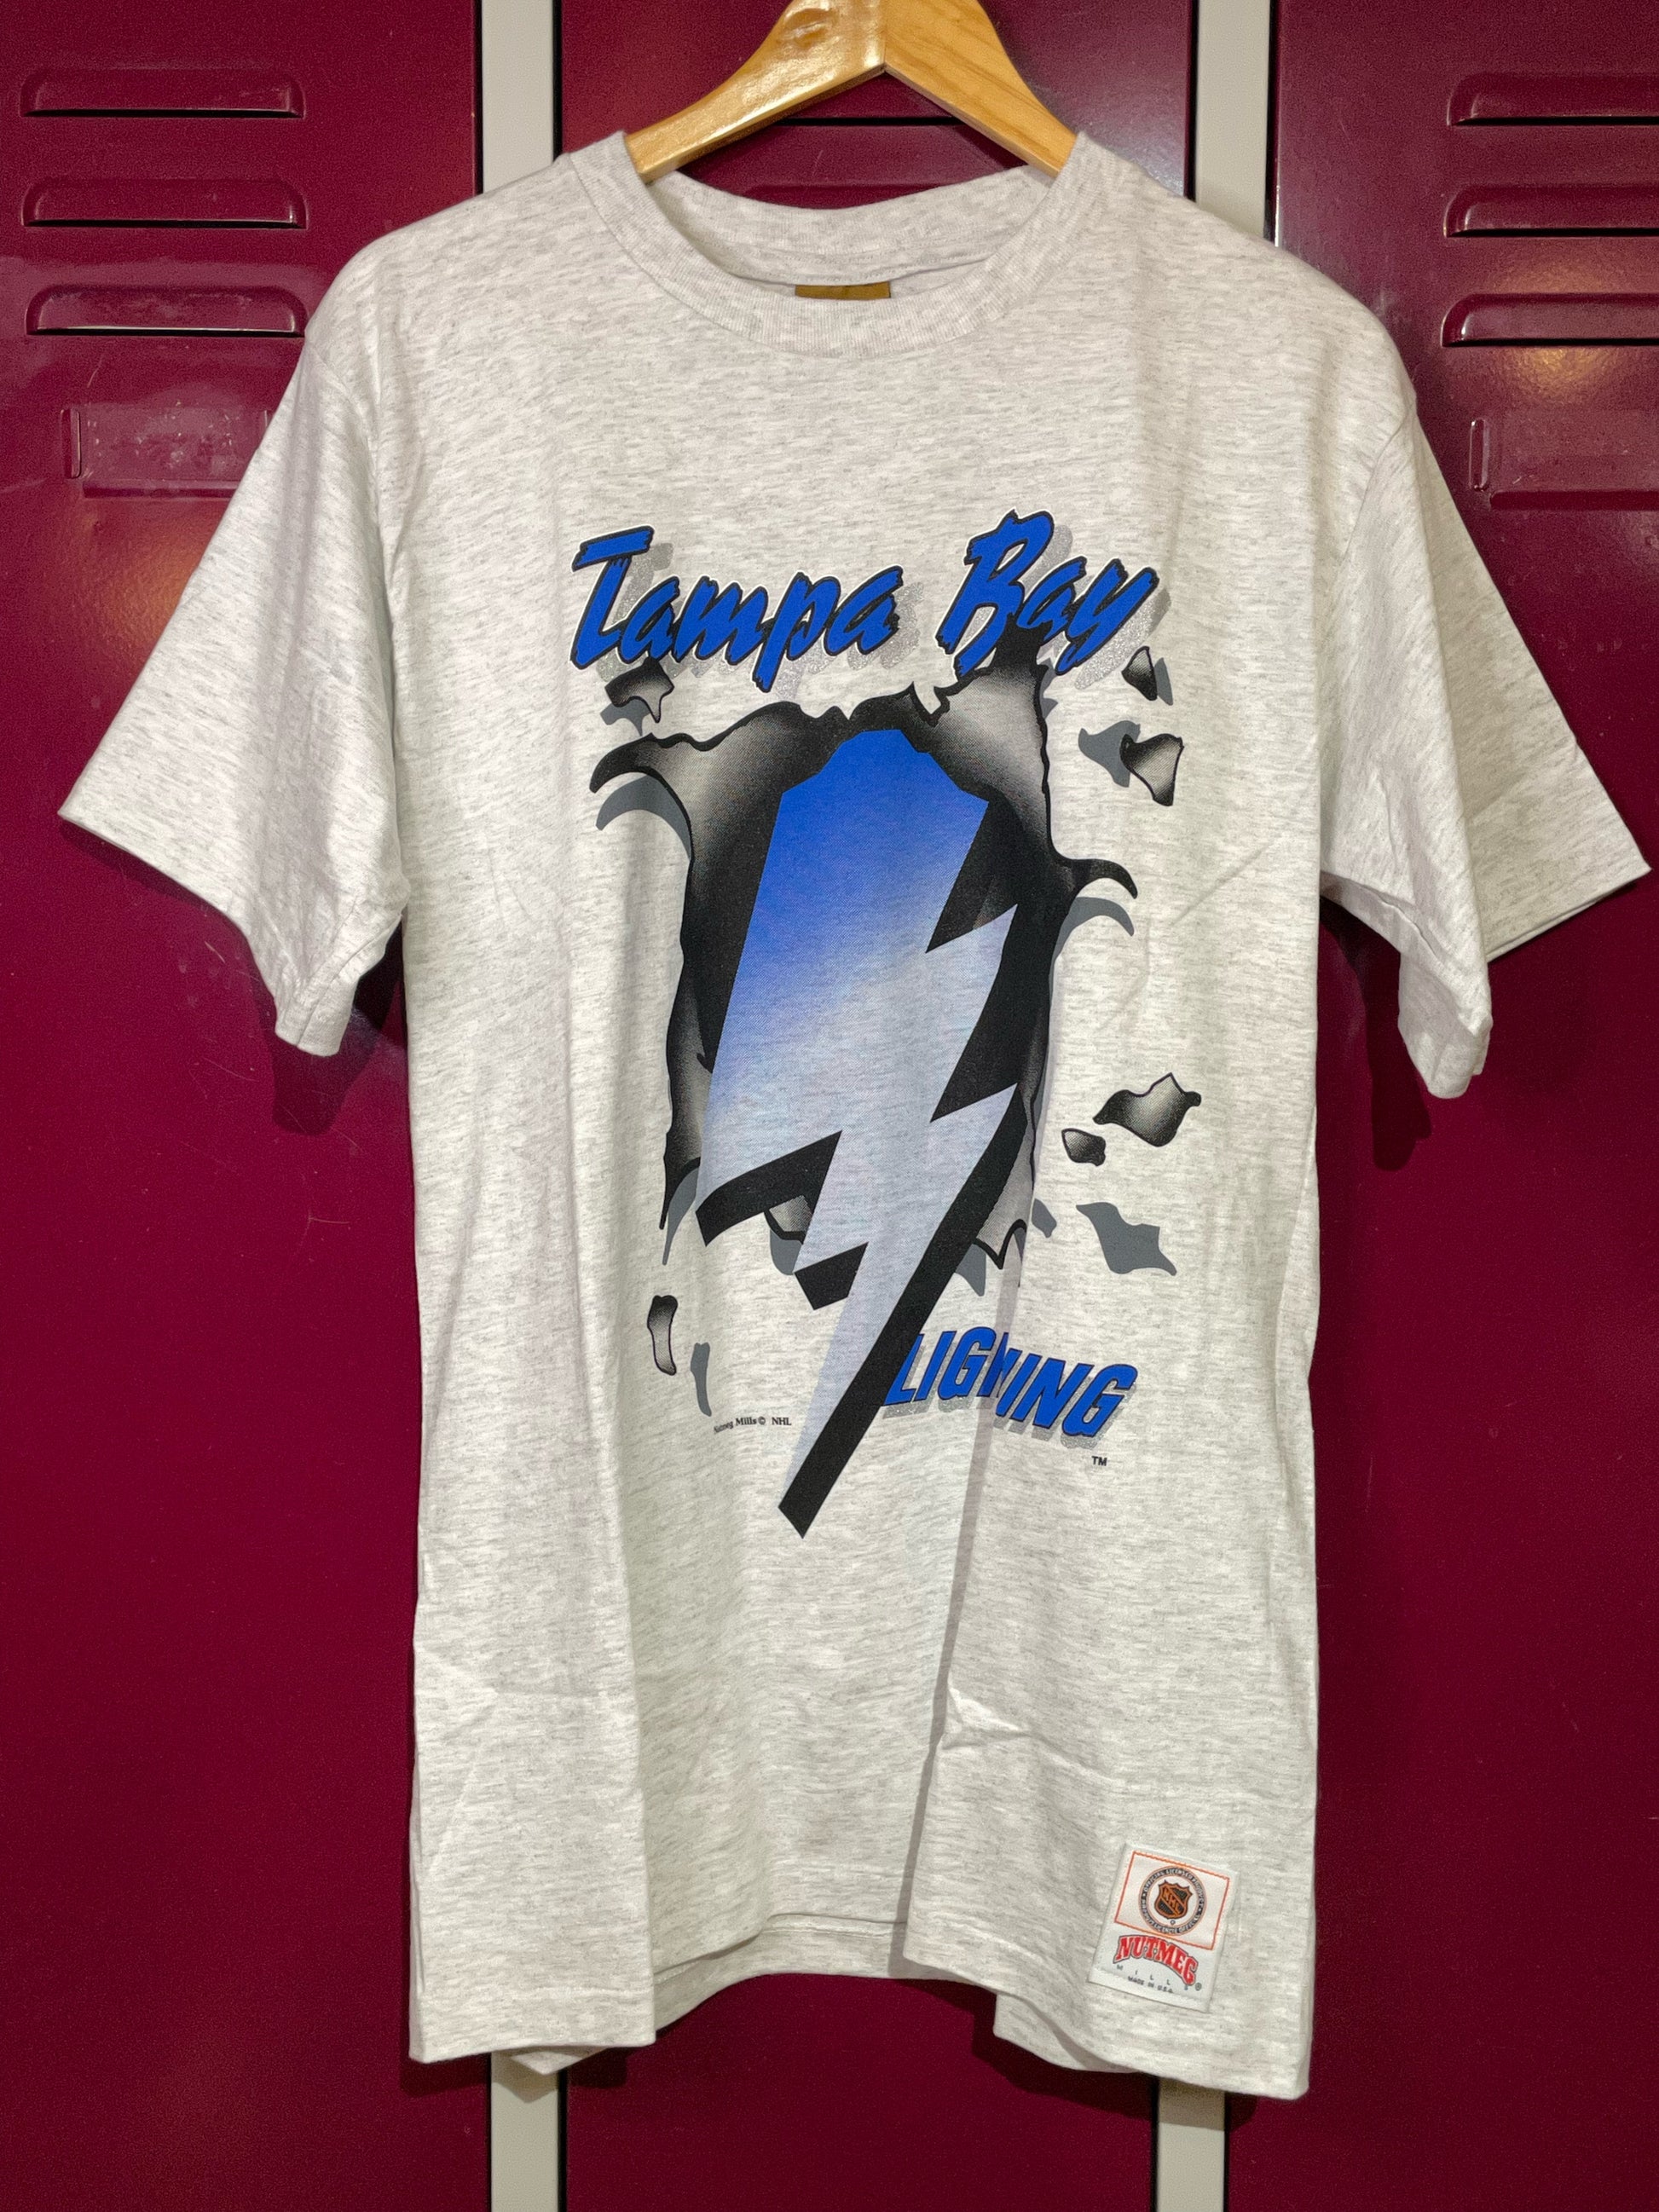 Black Friday Deals on Tampa Bay Lightning Merchandise, Lightning